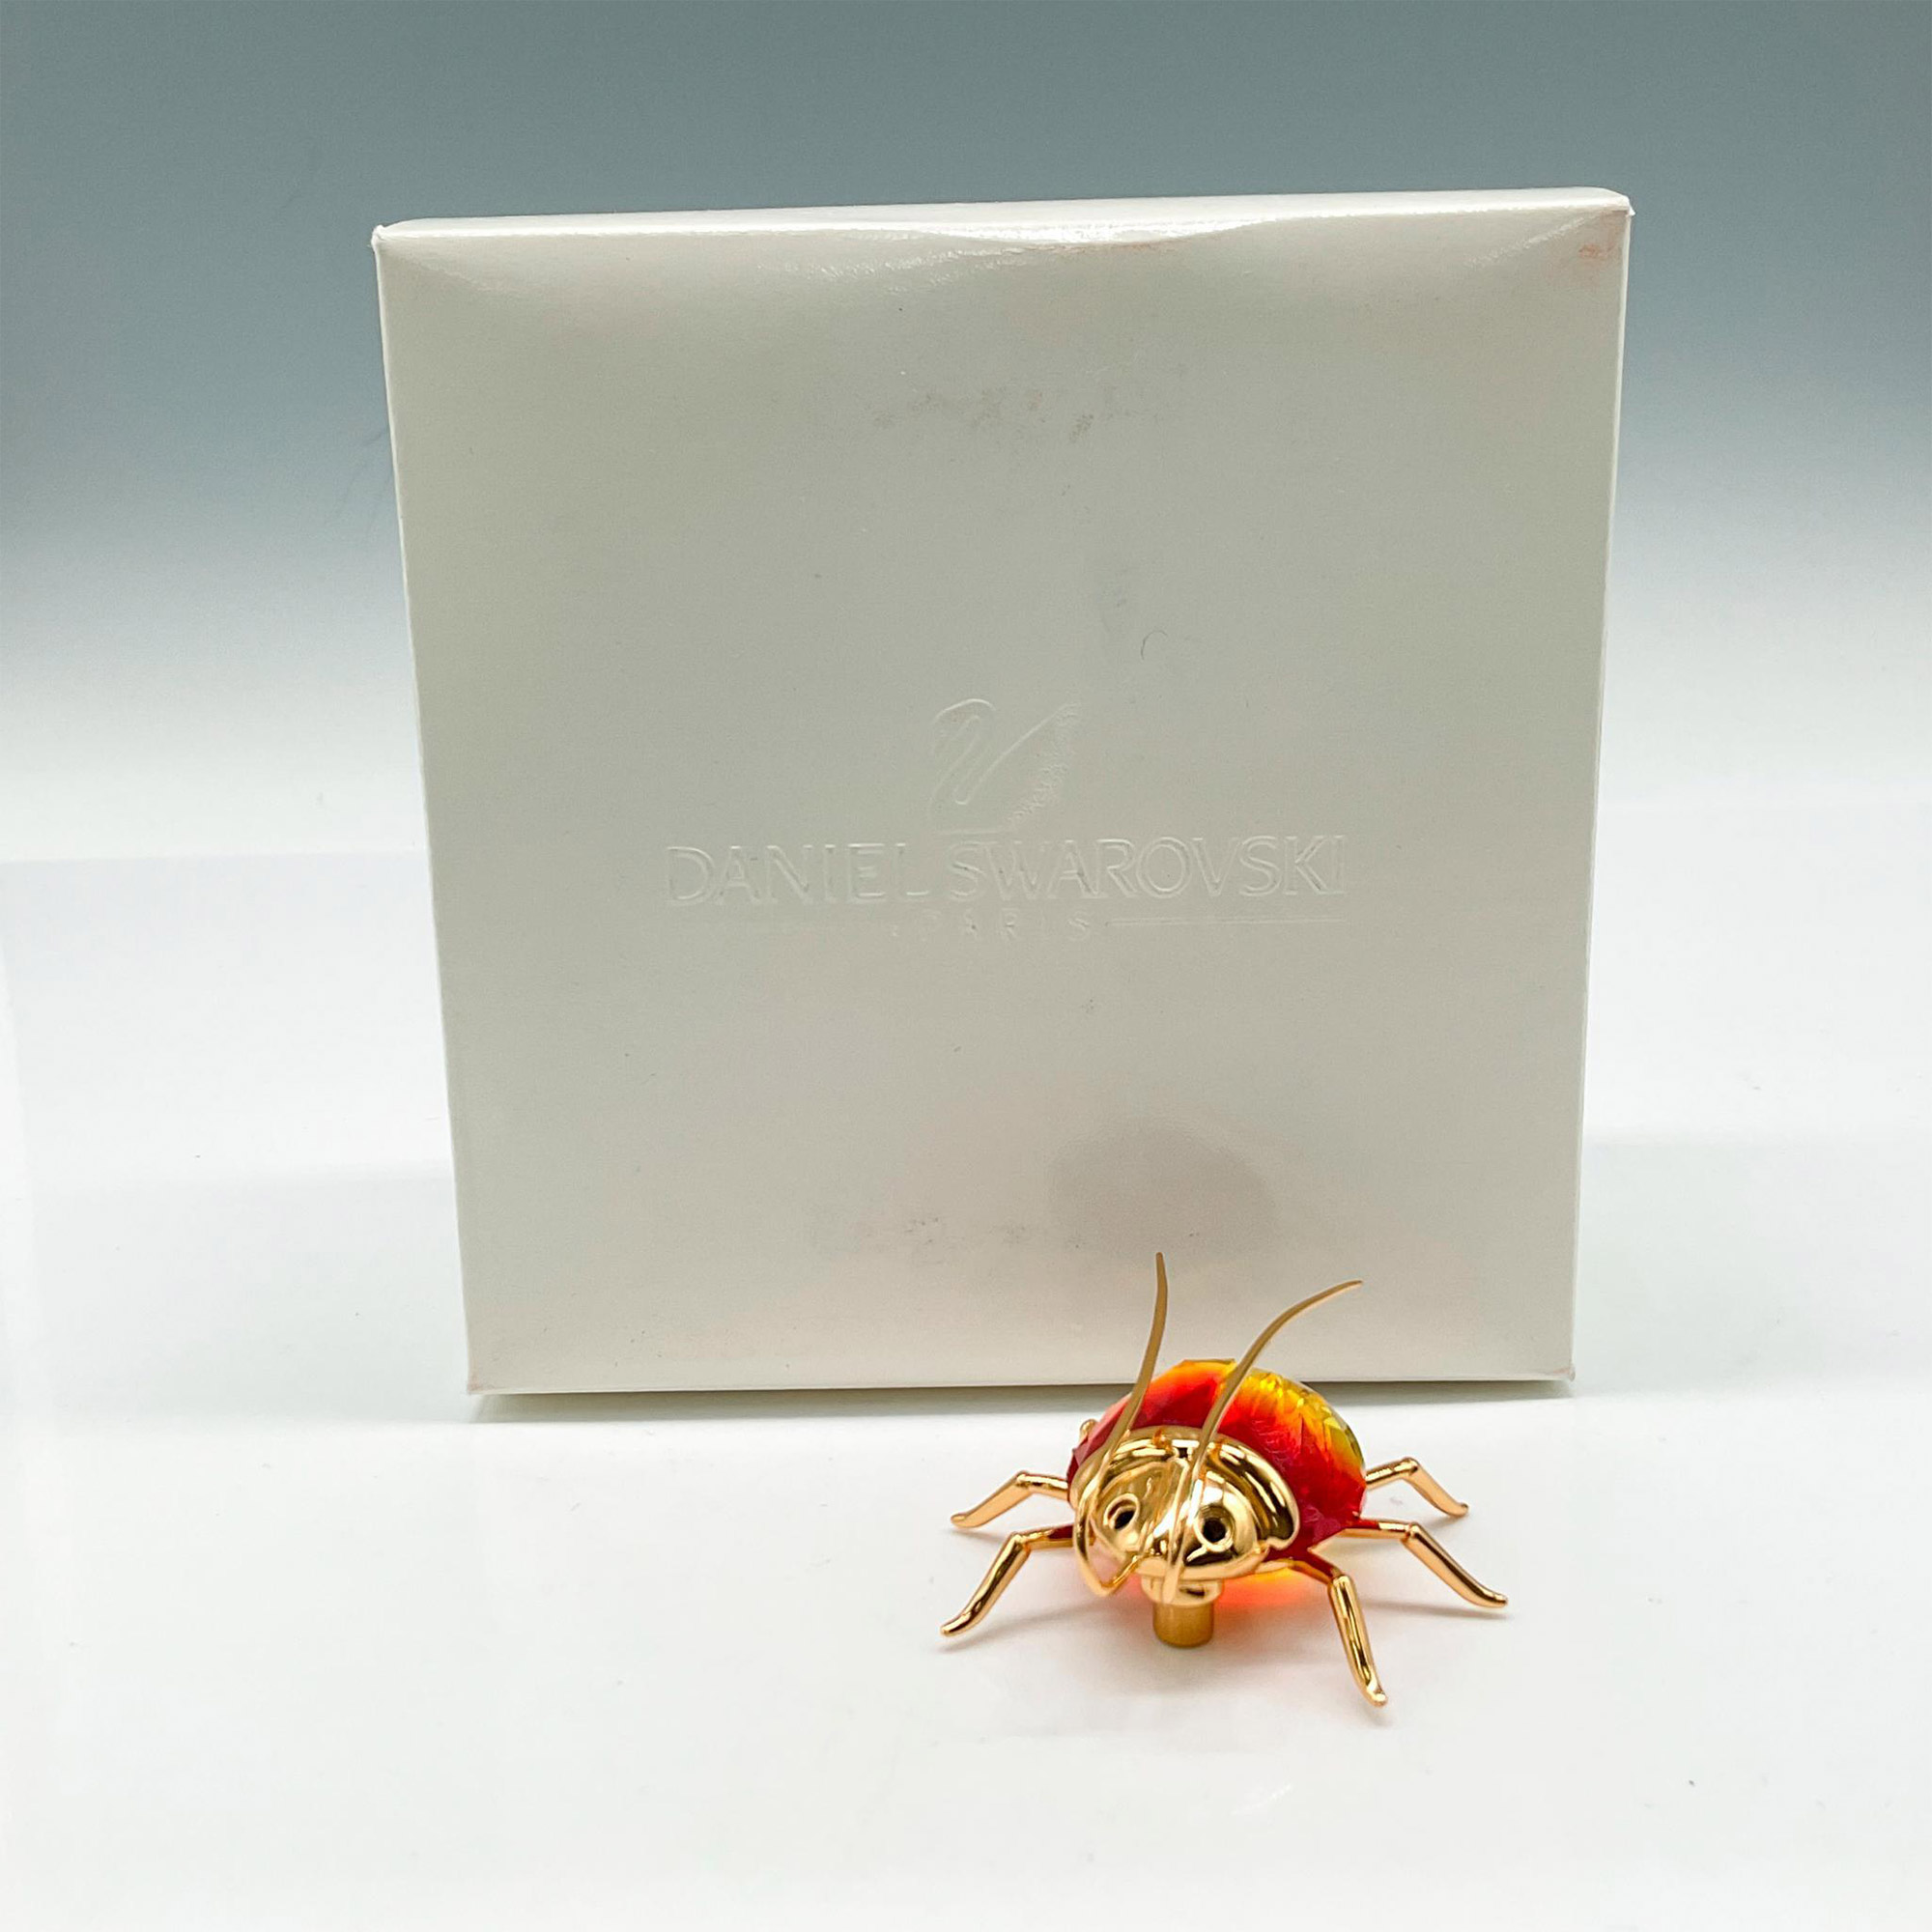 Swarovski Crystal Medium Brooch, Fire Opal Beetle - Image 4 of 4